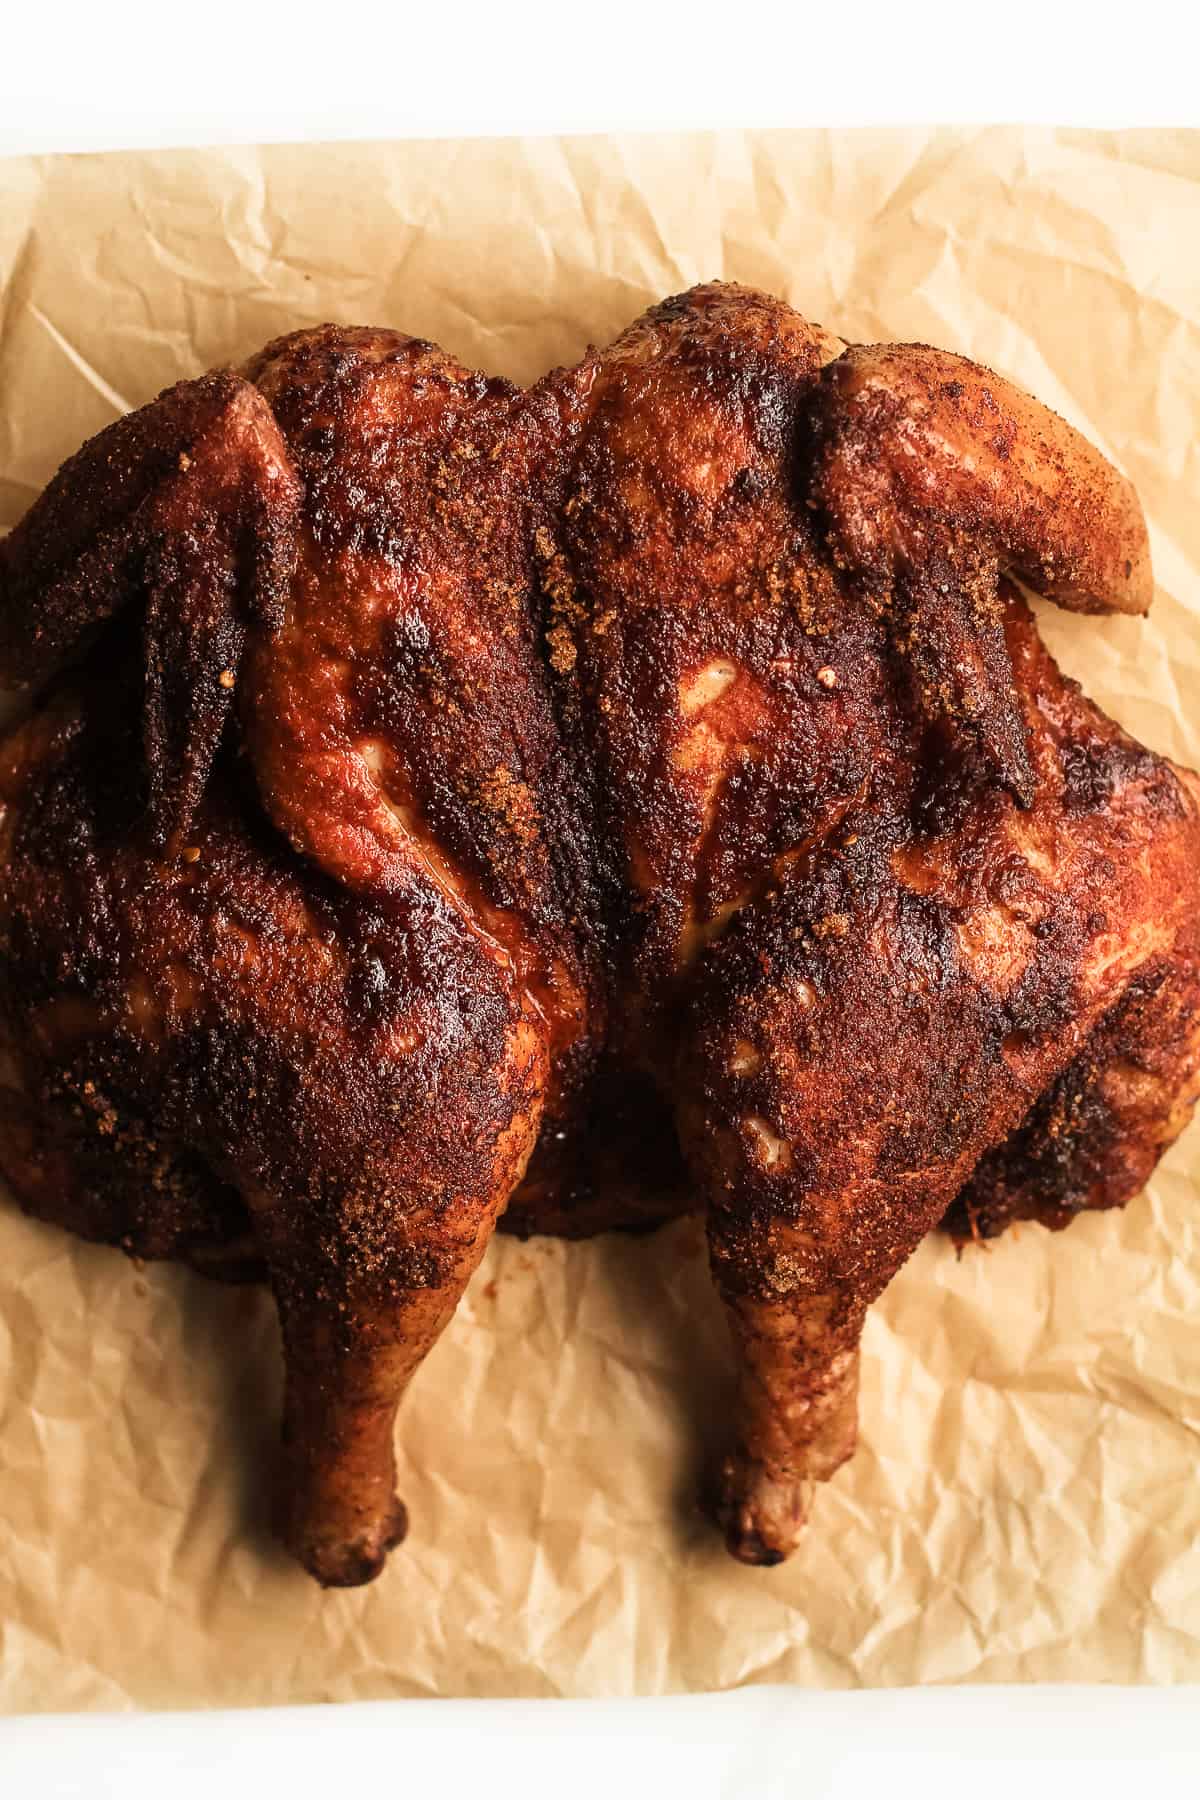 https://suebeehomemaker.com/wp-content/uploads/2021/03/smoked-spatchcock-chicken-with-blackened-seasoning.jpg